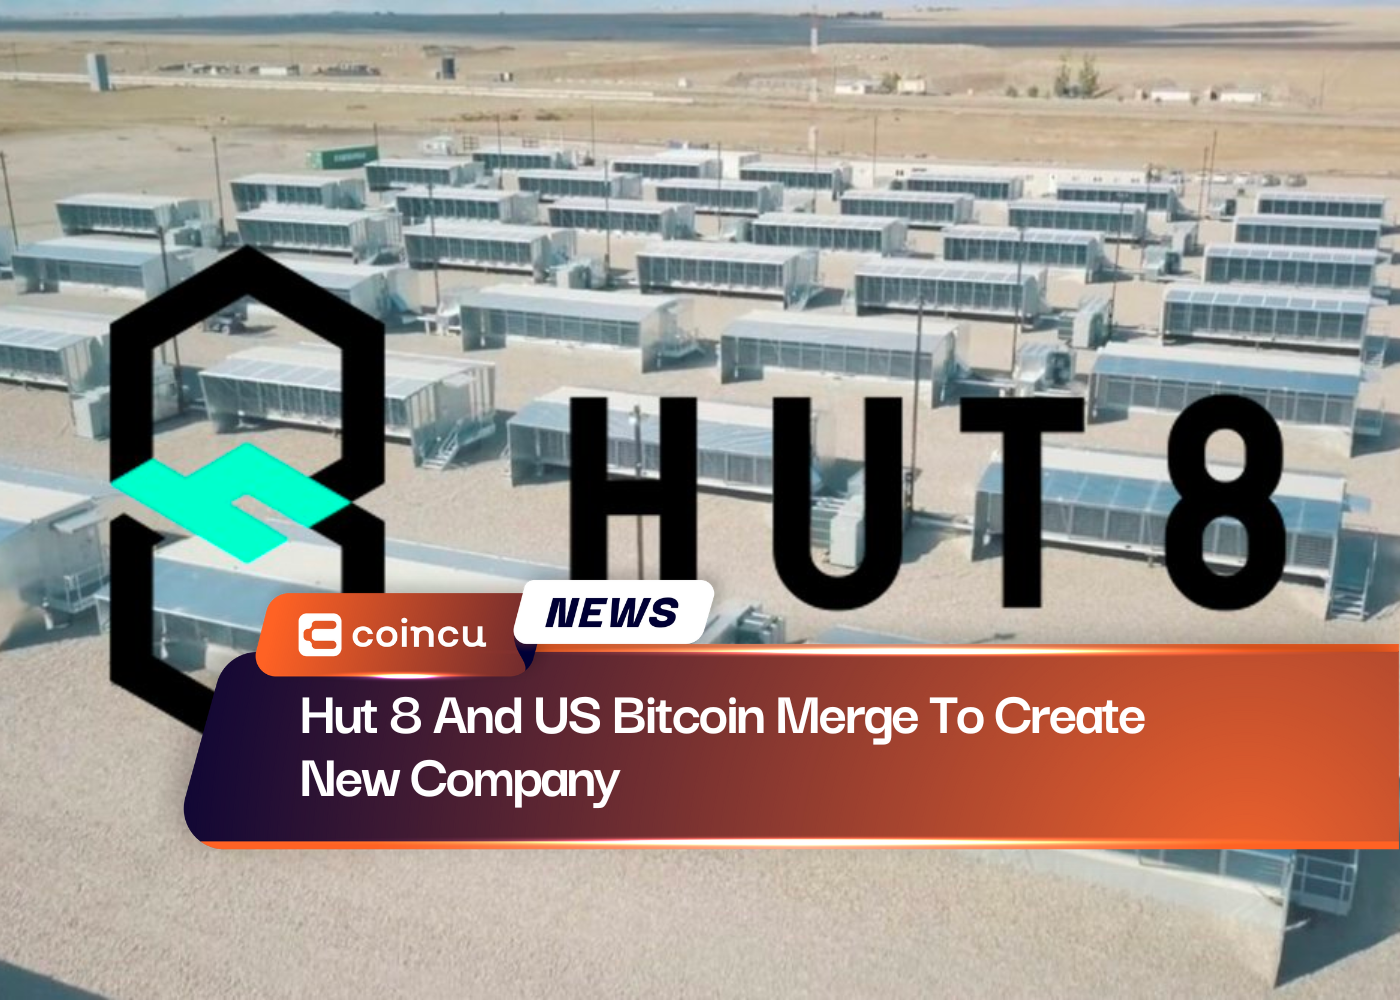 Hut 8 And US Bitcoin Merge To Create New Company